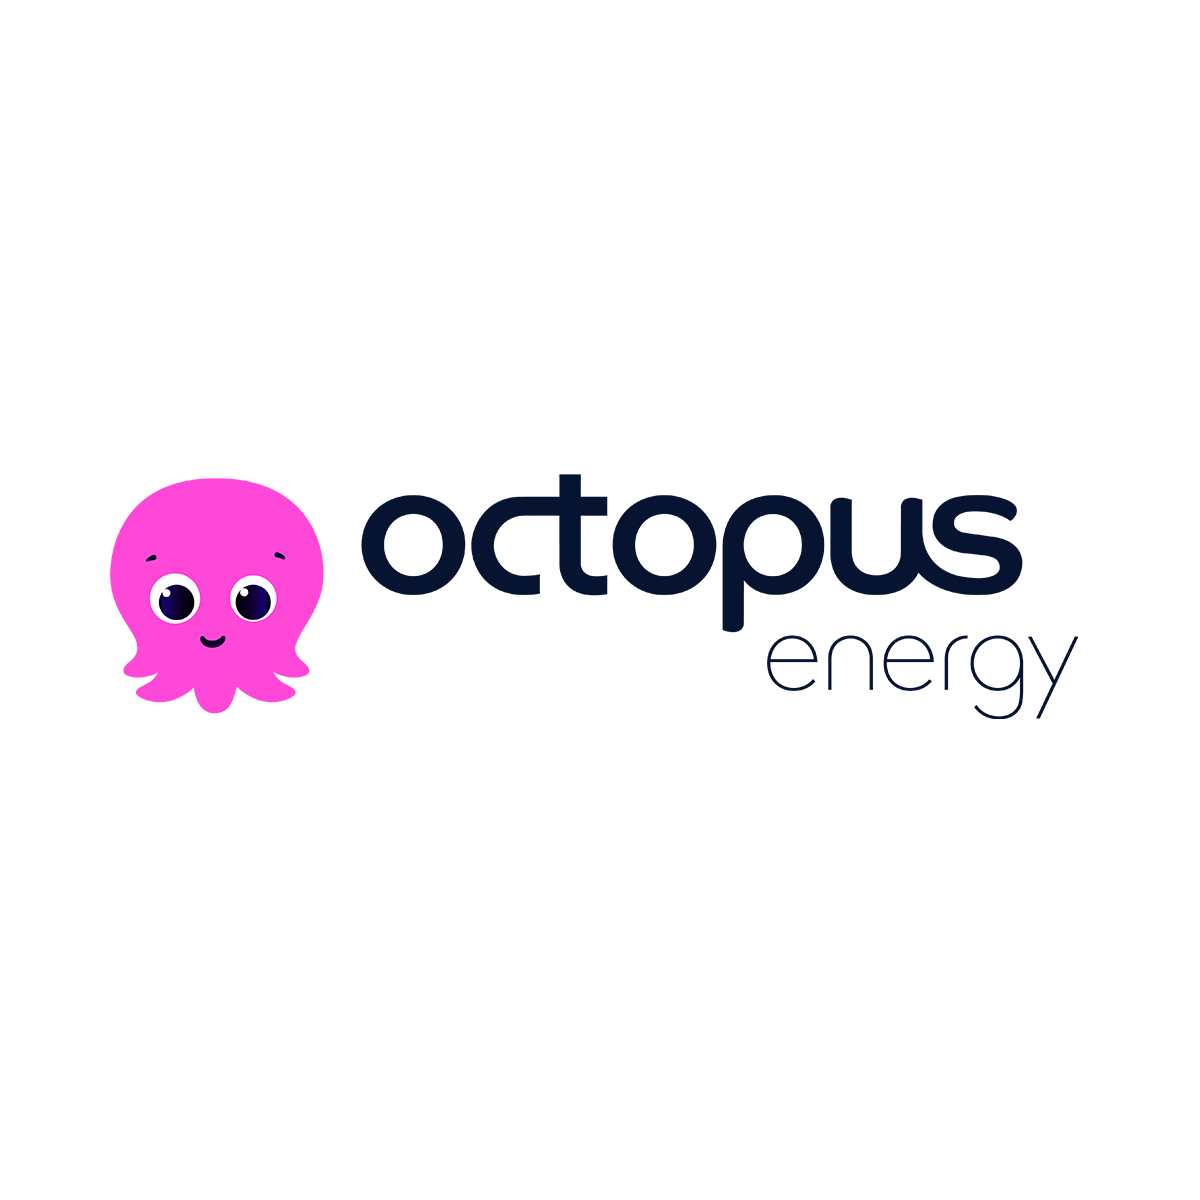 octopus energy logo